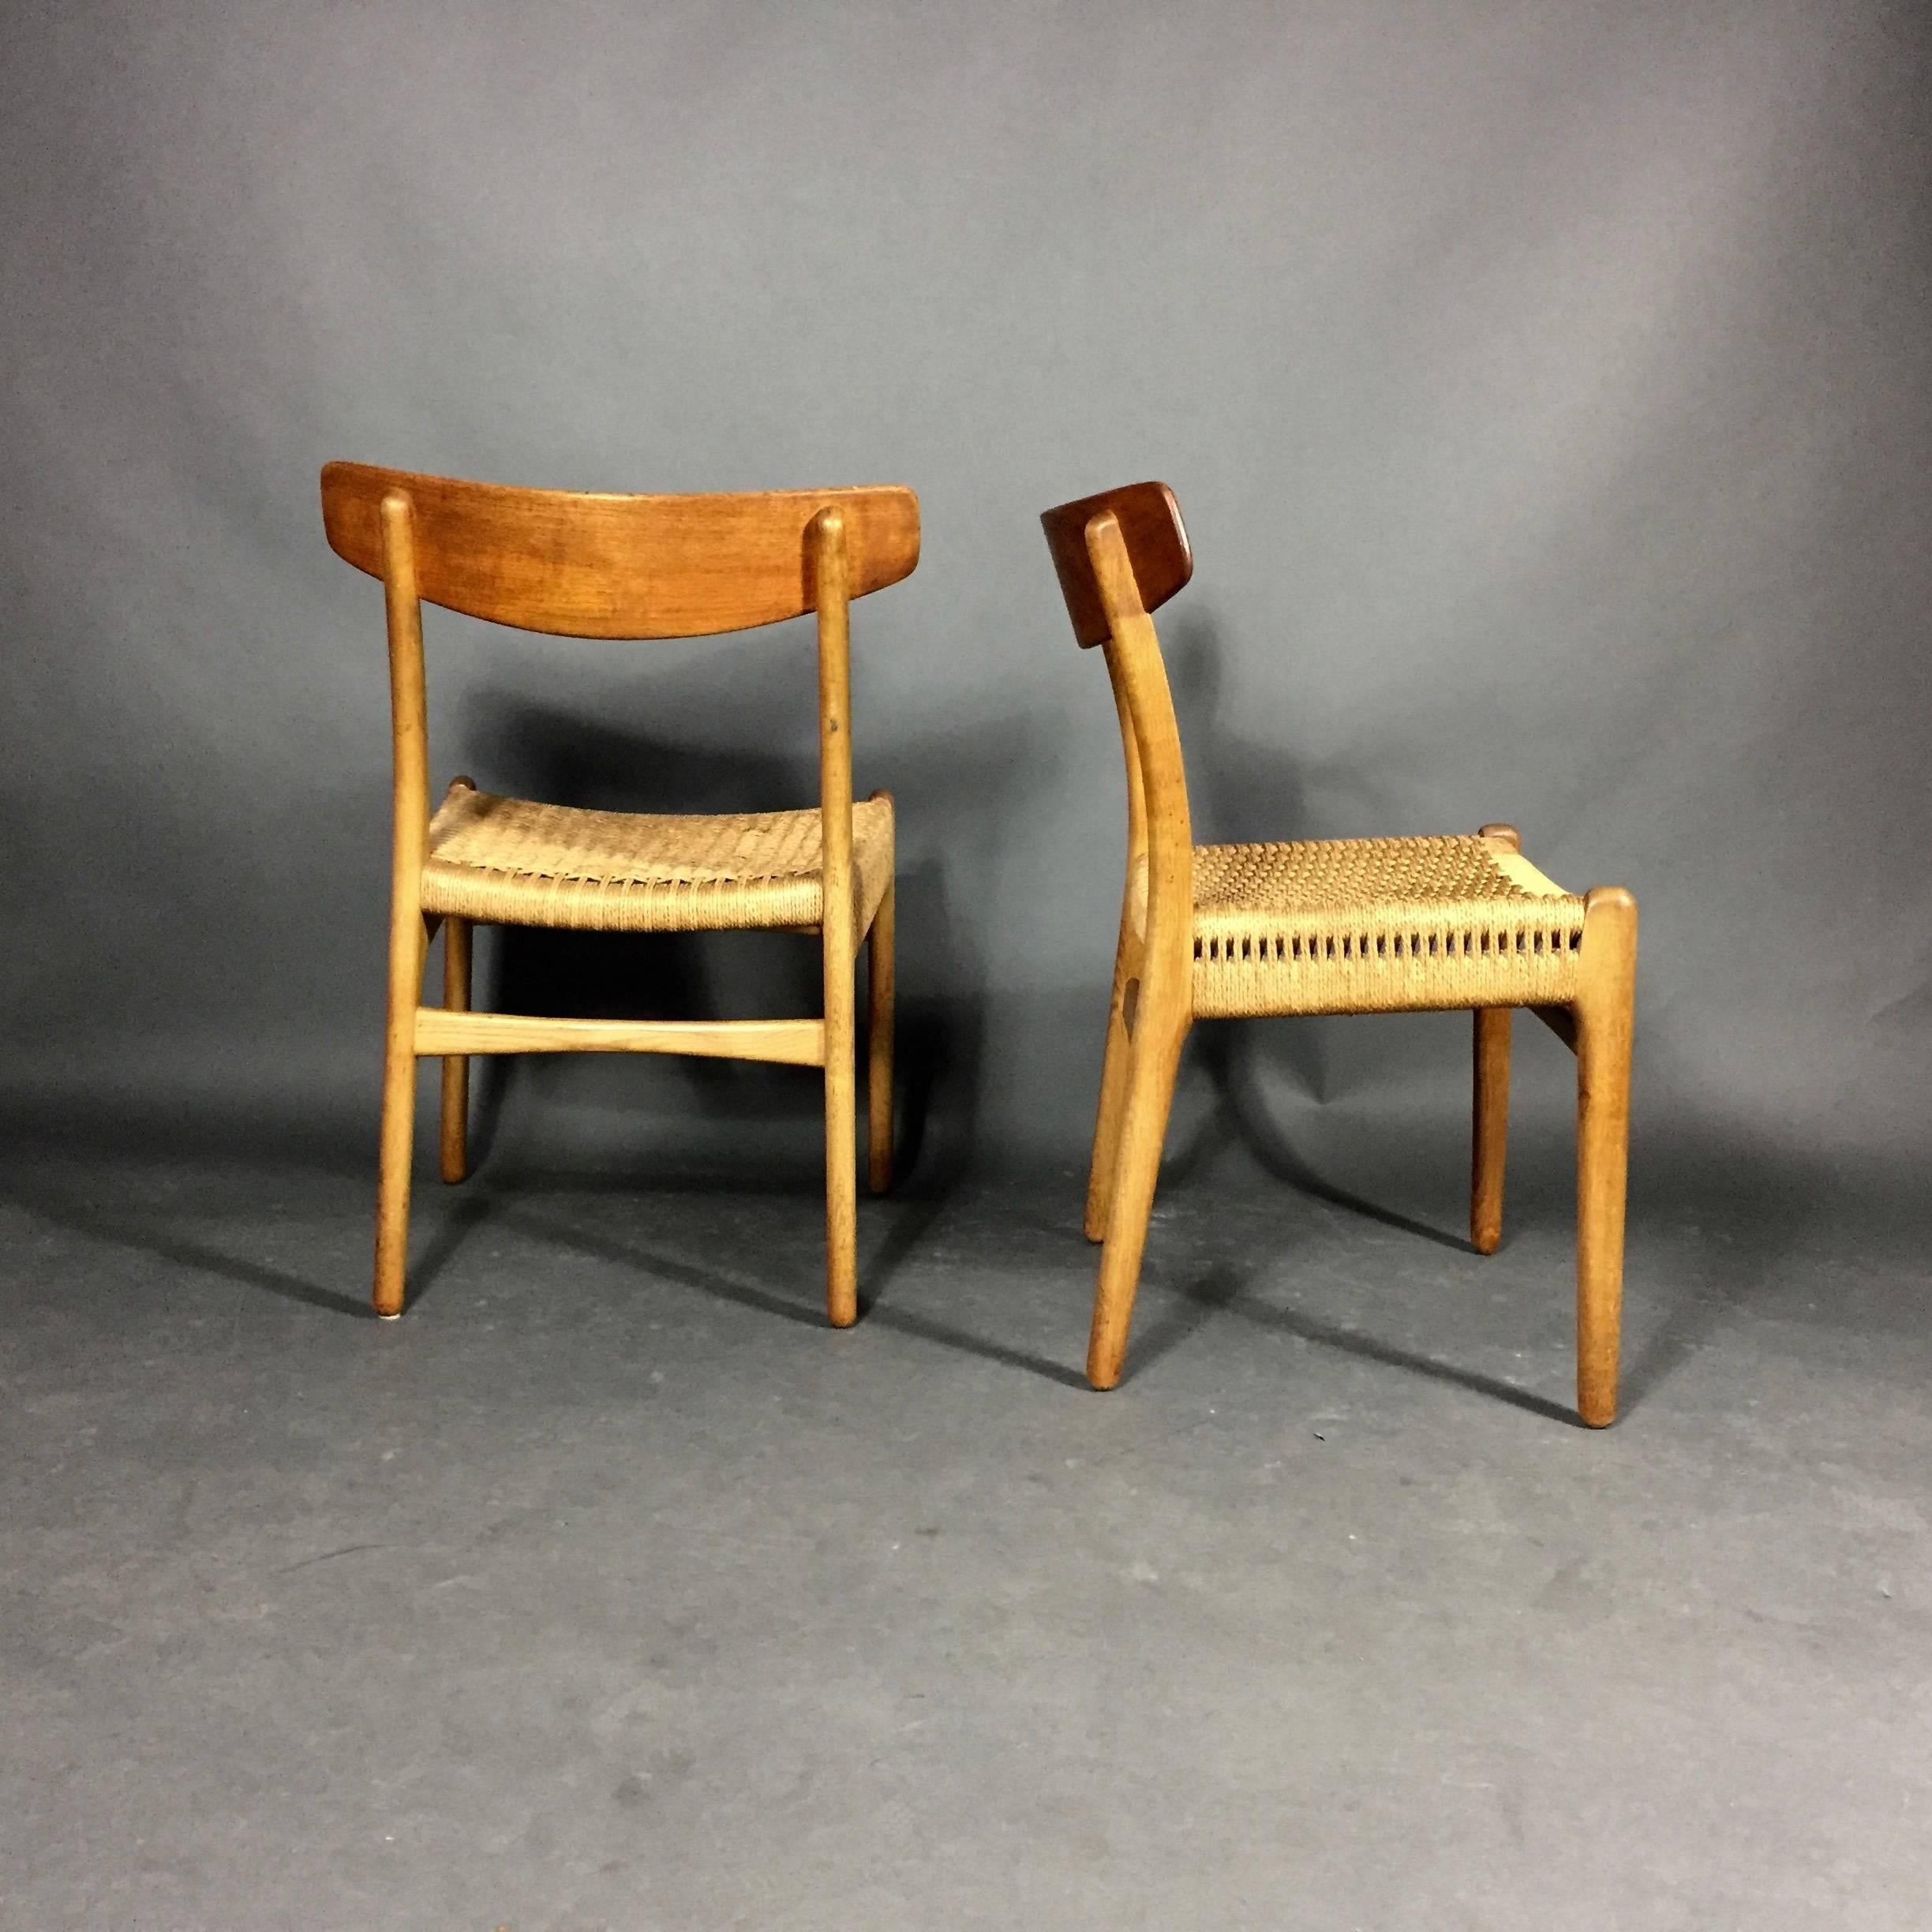 Scandinavian Modern Hans J. Wegner CH23 Dining Chairs, Teak and Paperboard, Denmark, 1950s